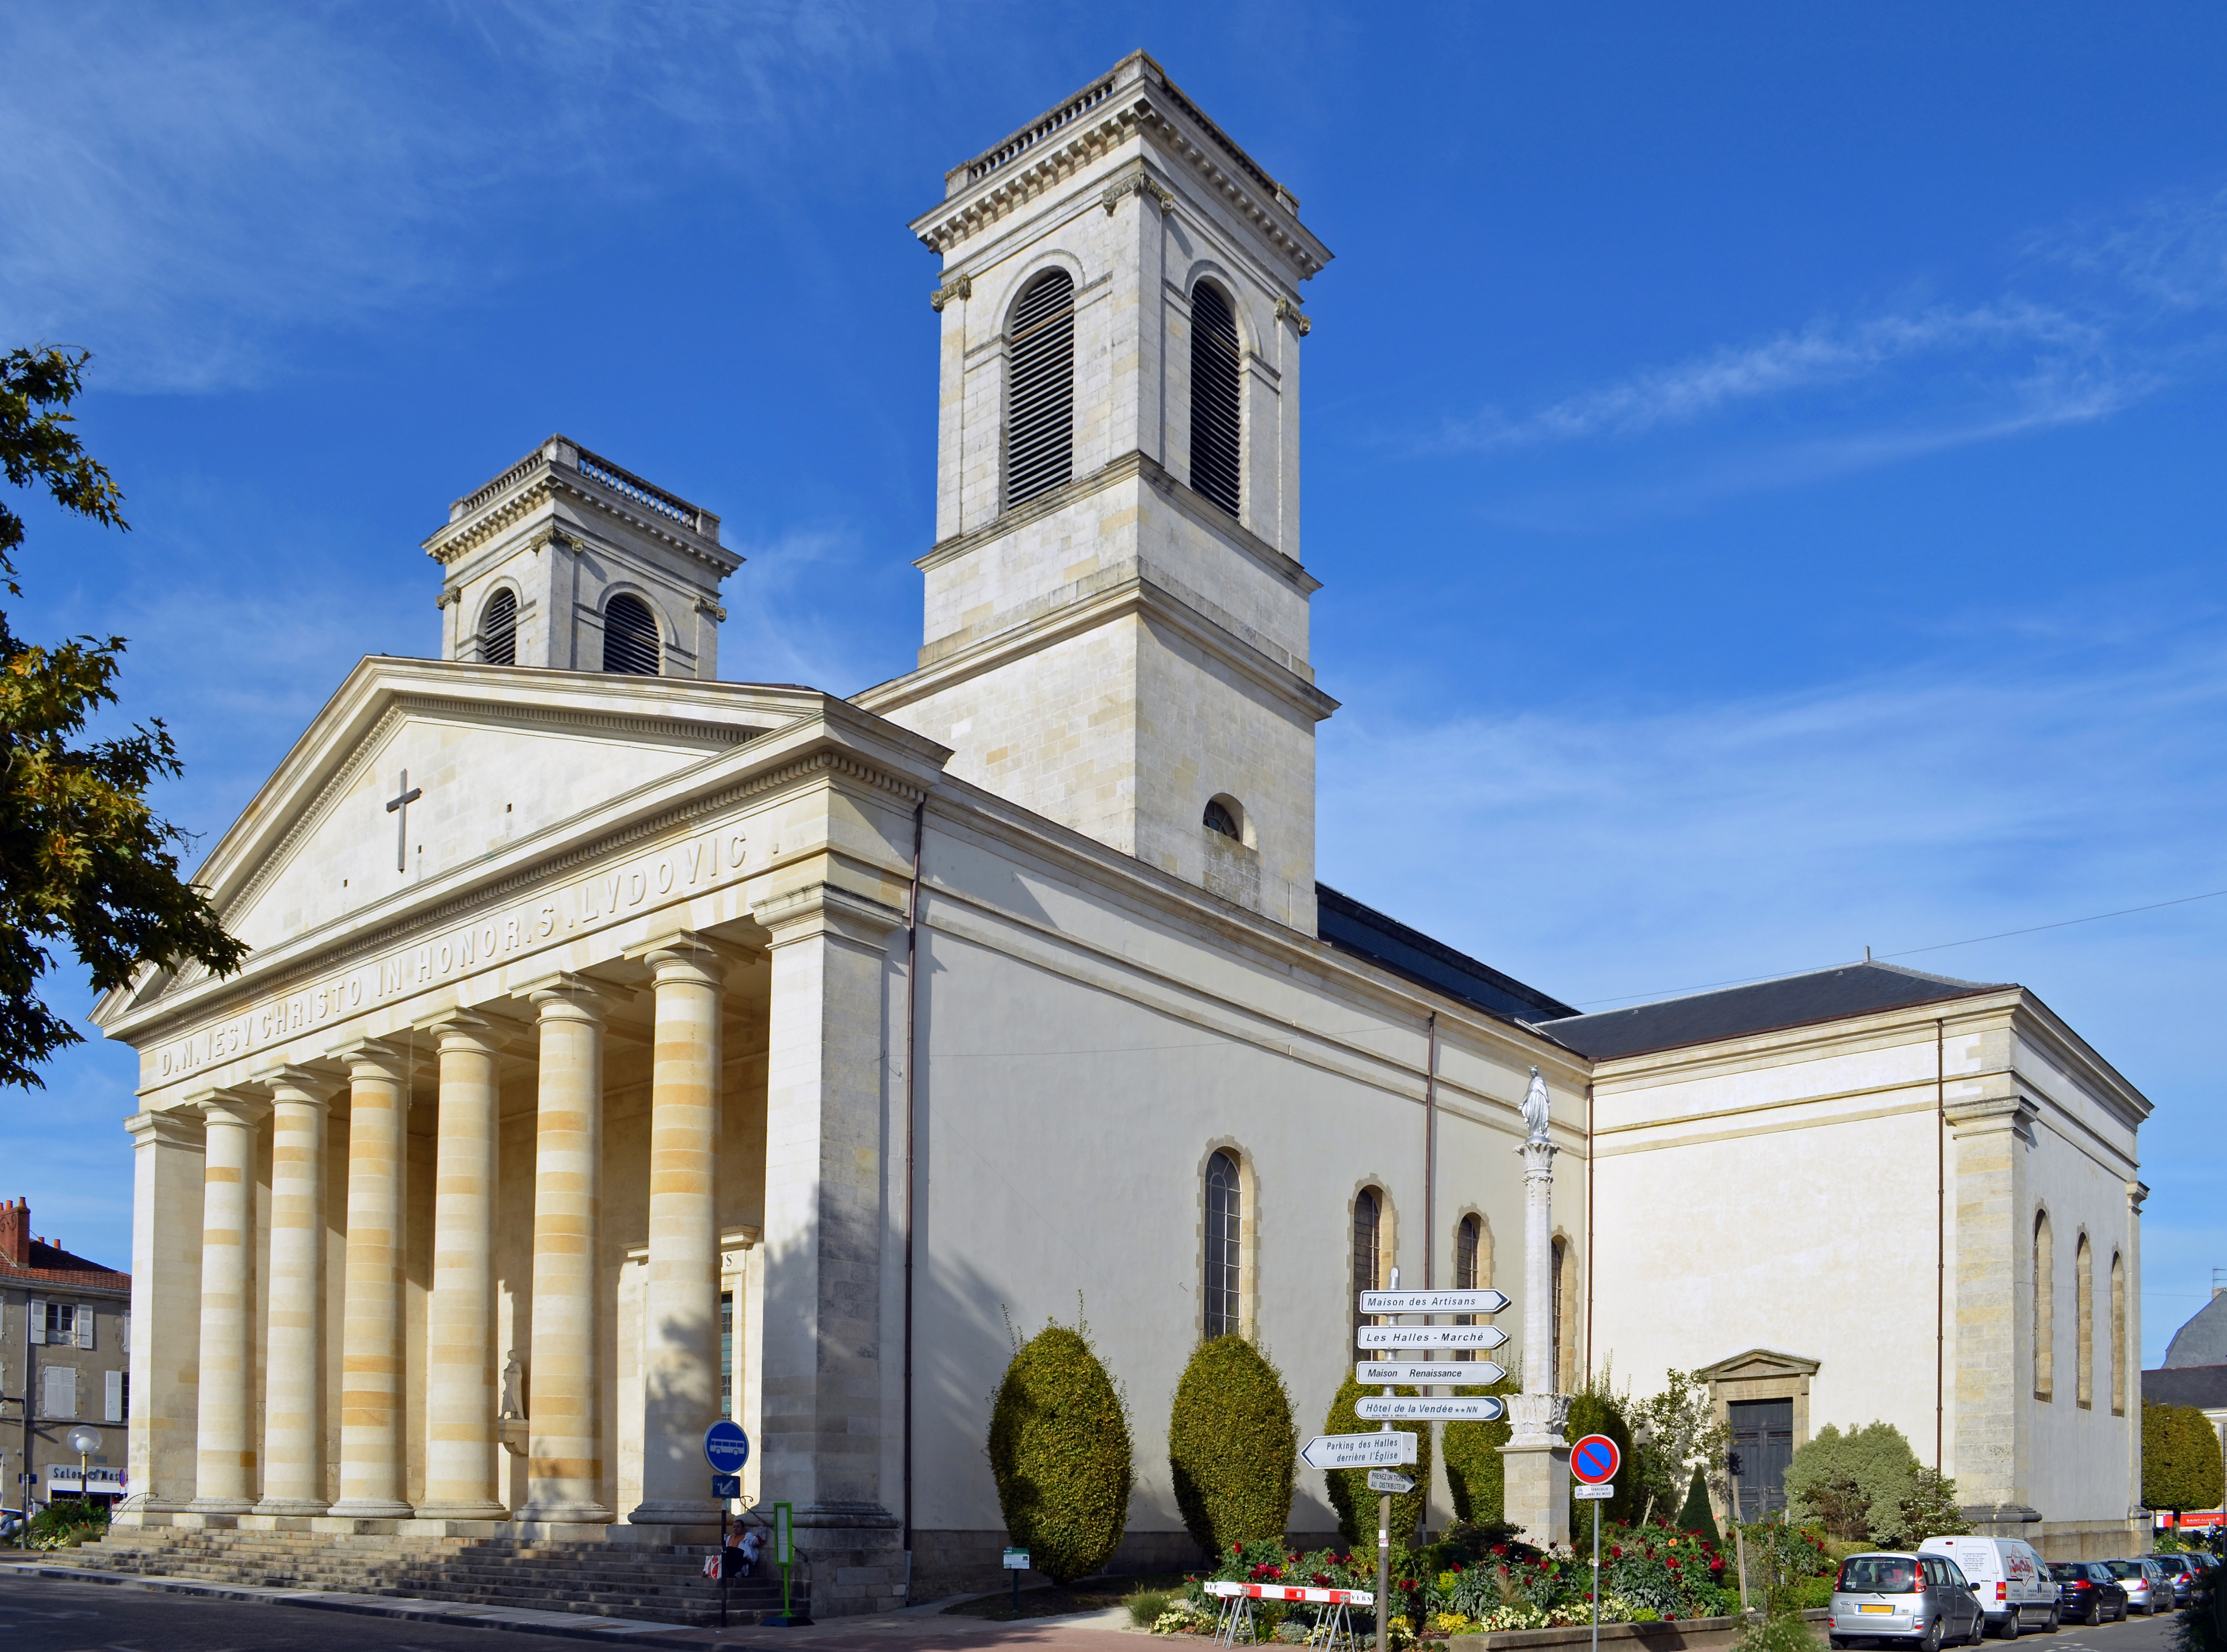 Église Saint-Louis (façade droite) - La Roche-sur-Yon